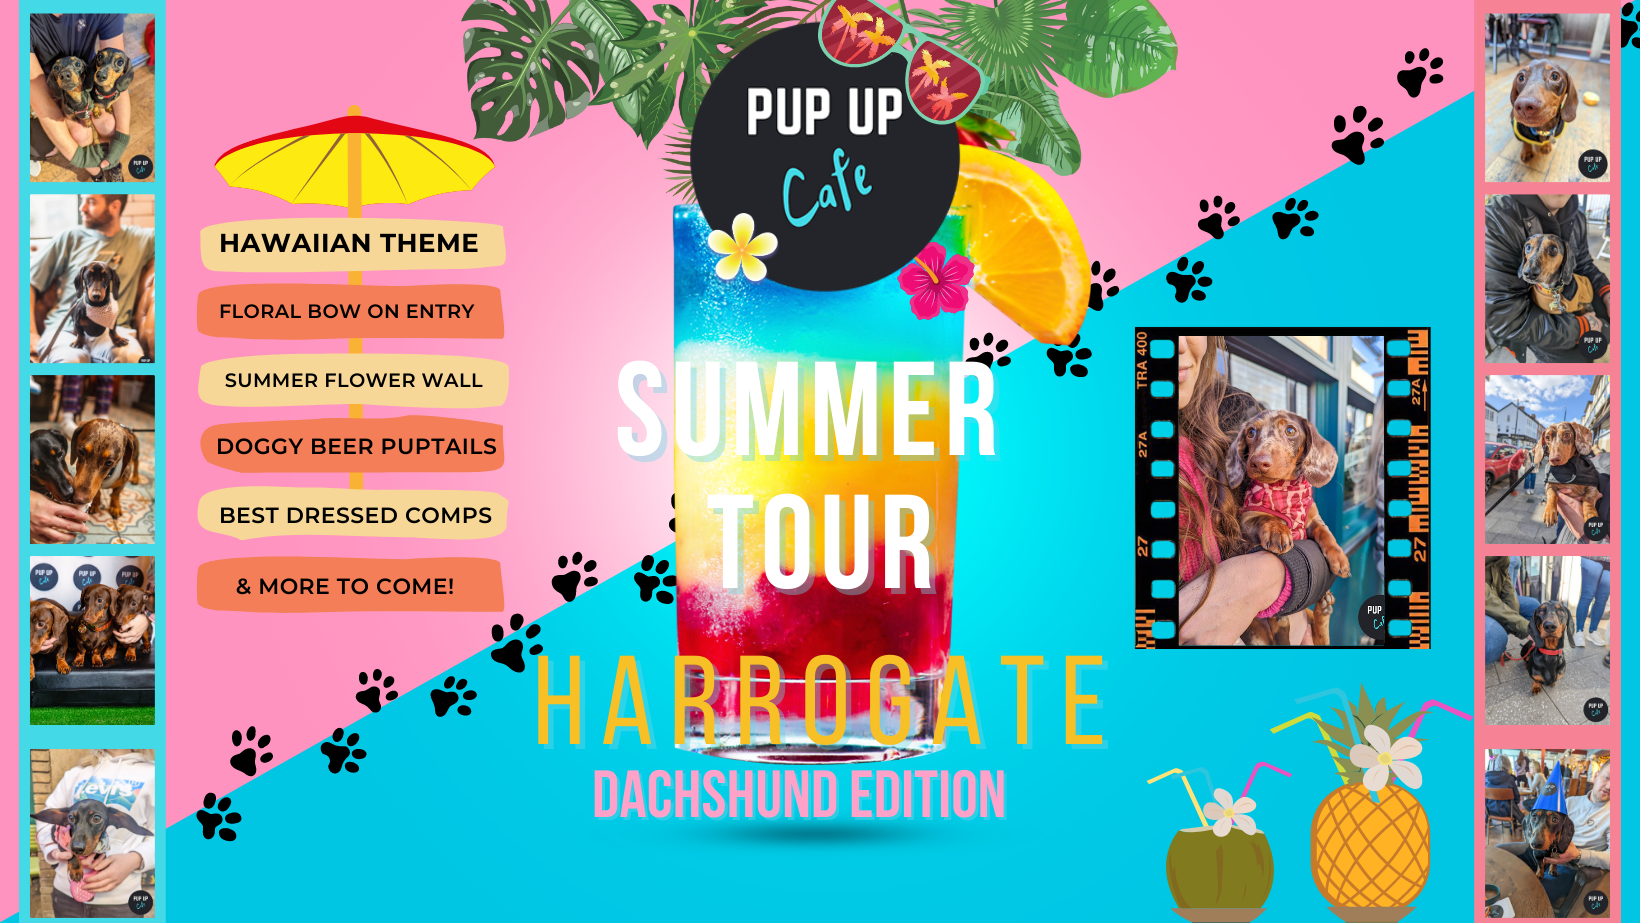 Dachshund Pup Up Cafe – Harrogate | SUMMER TOUR! 🌞